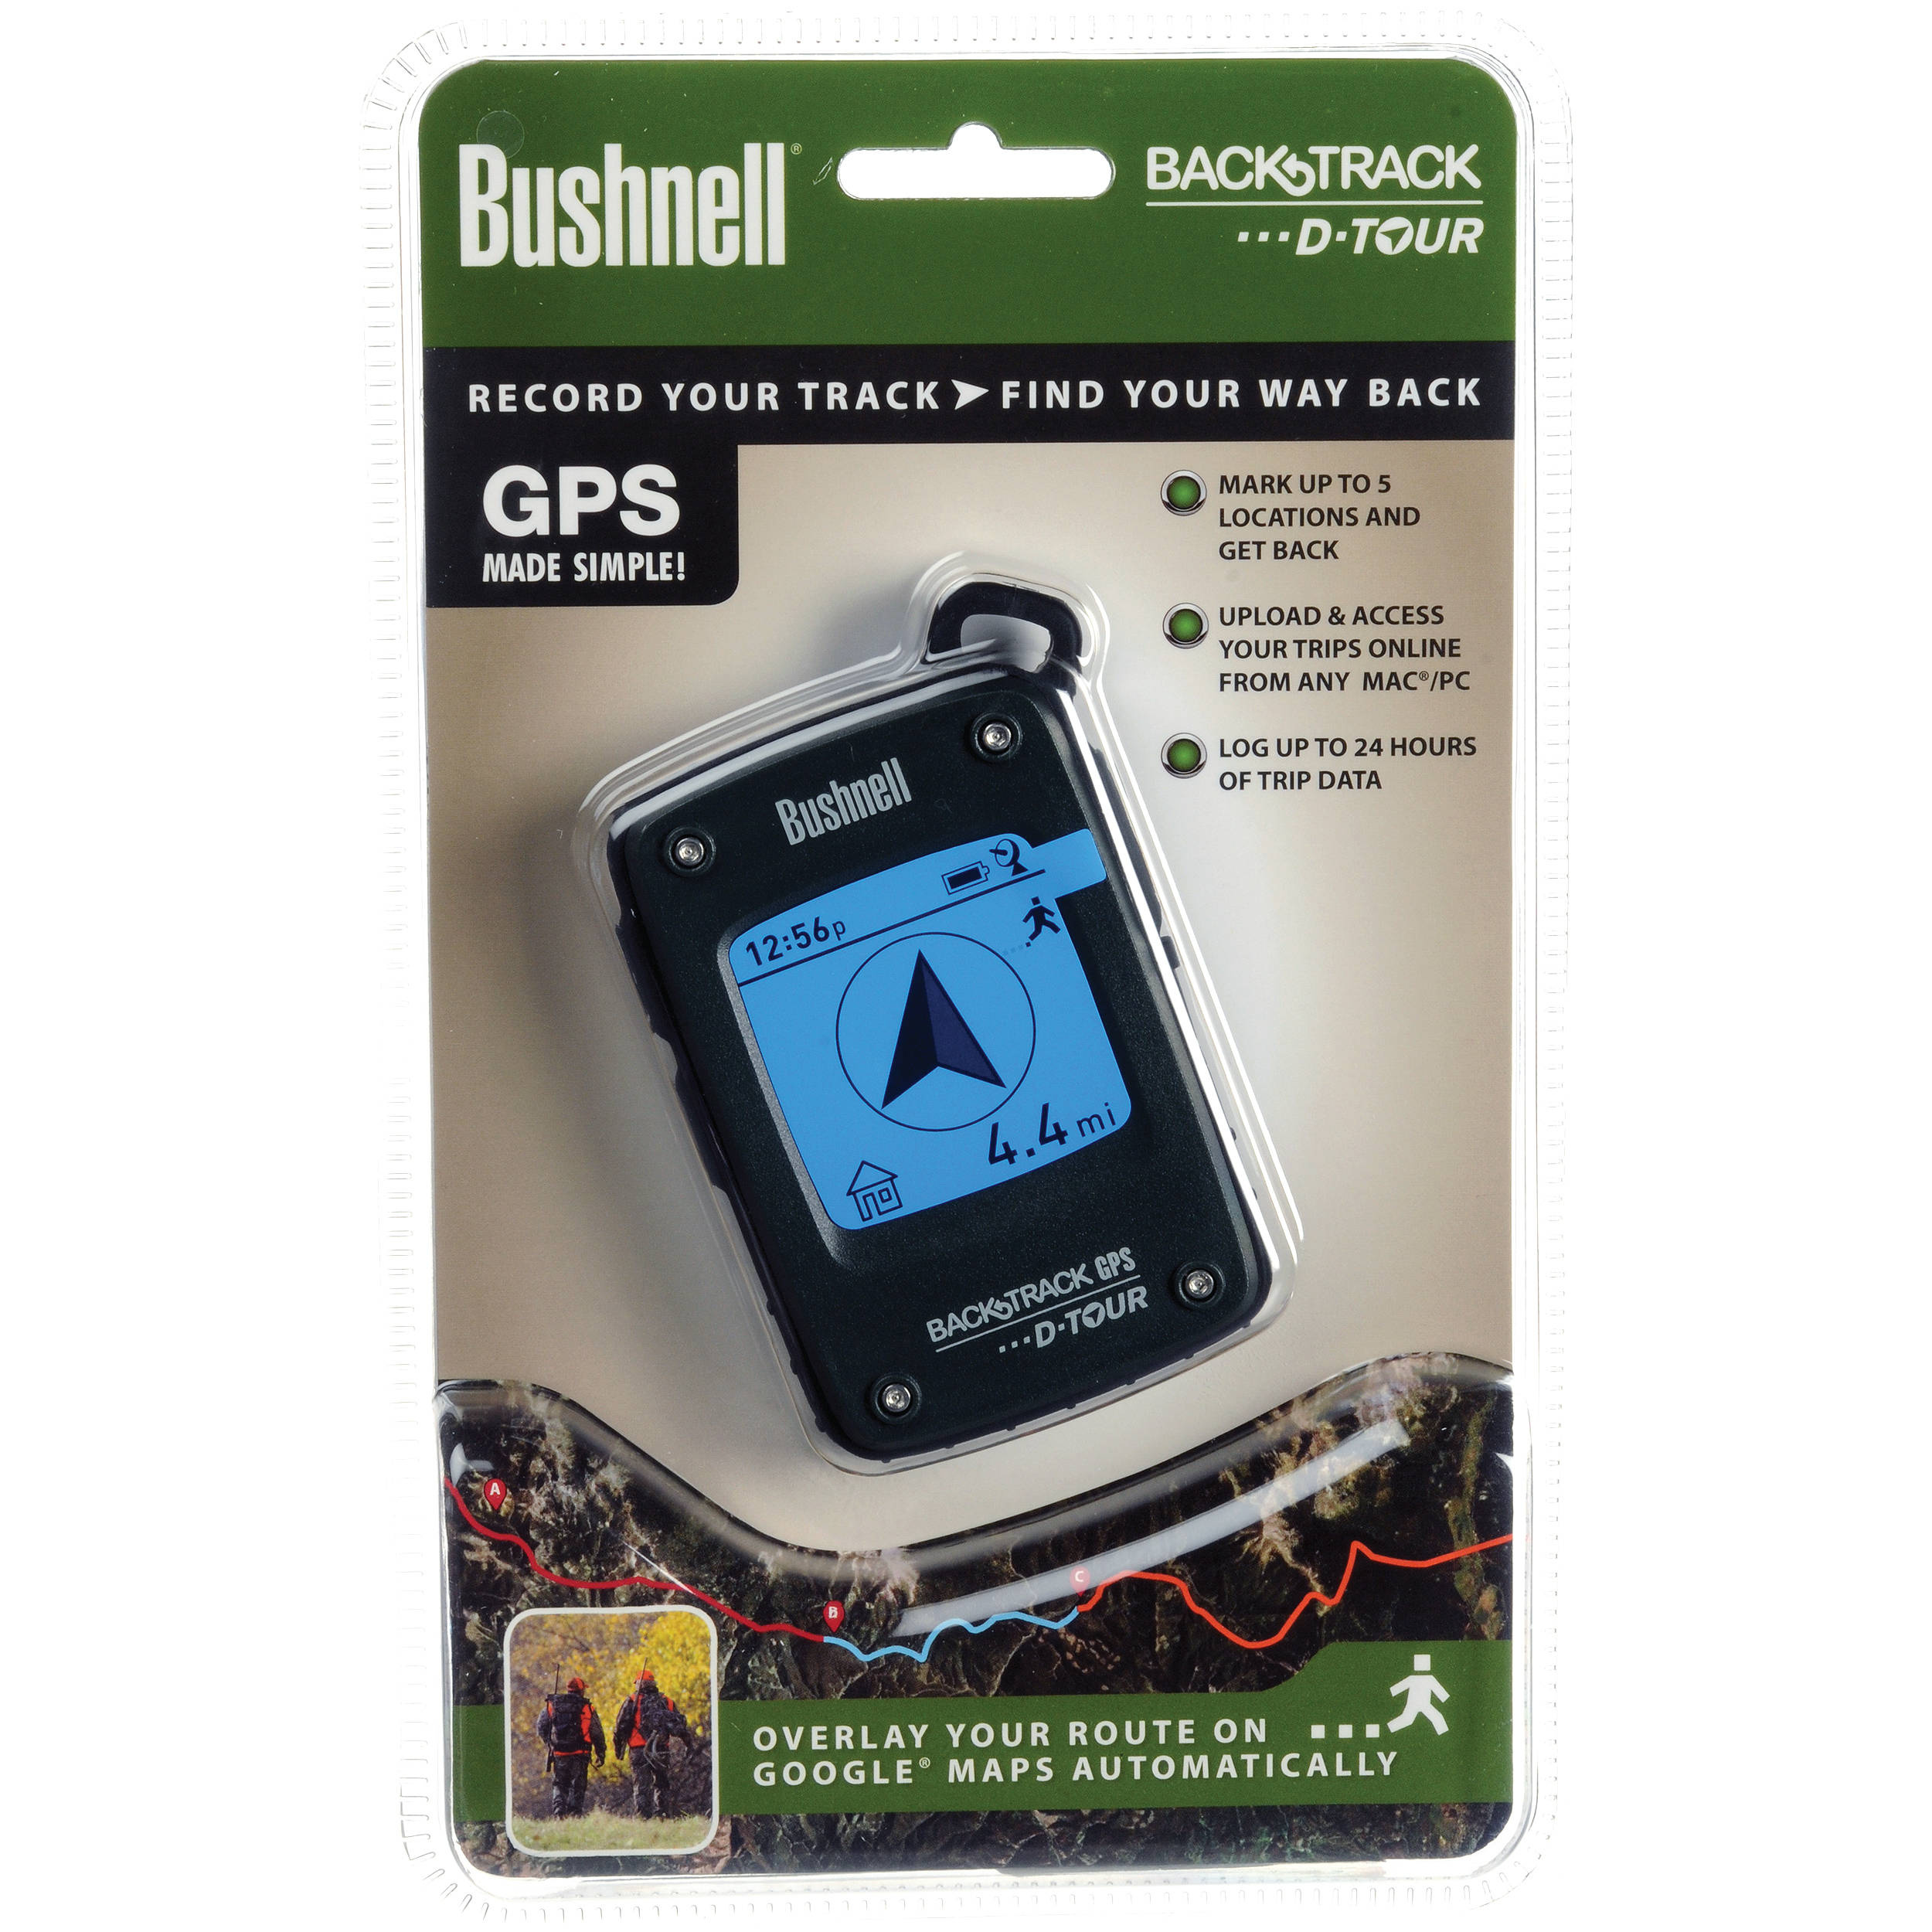 Bushnell Back-Track D-TOUR GPS (Green)